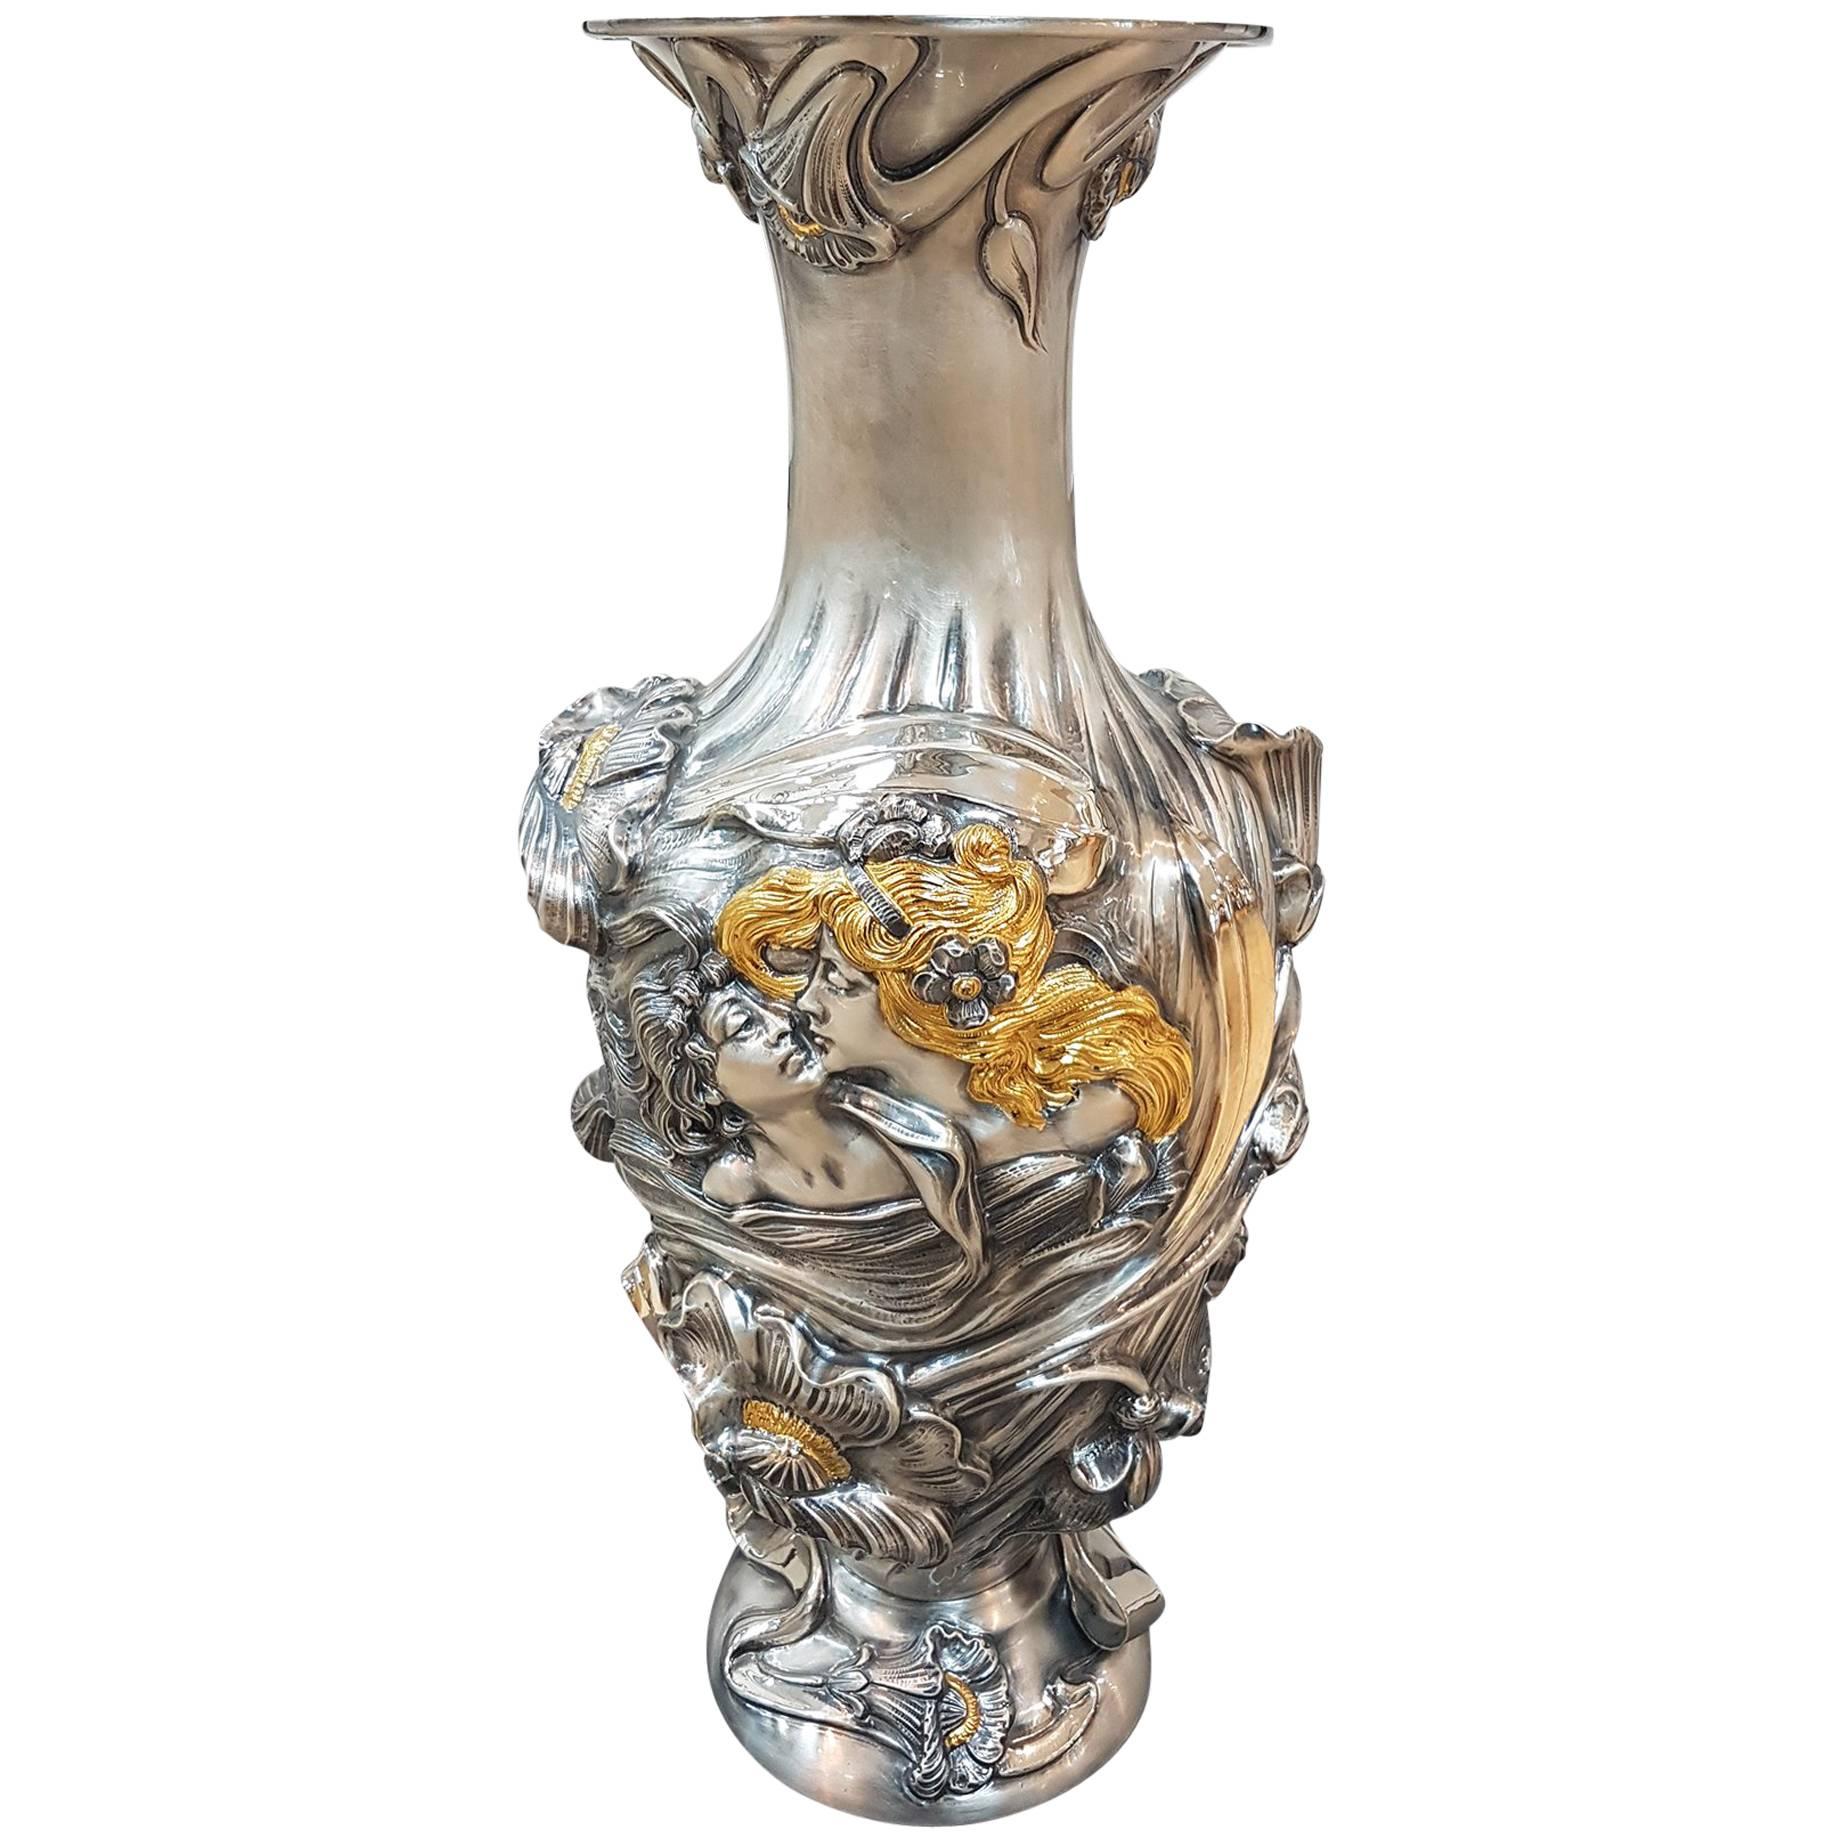 20th Century Art Nouveau Revival Italian Sterling Silver Vase 